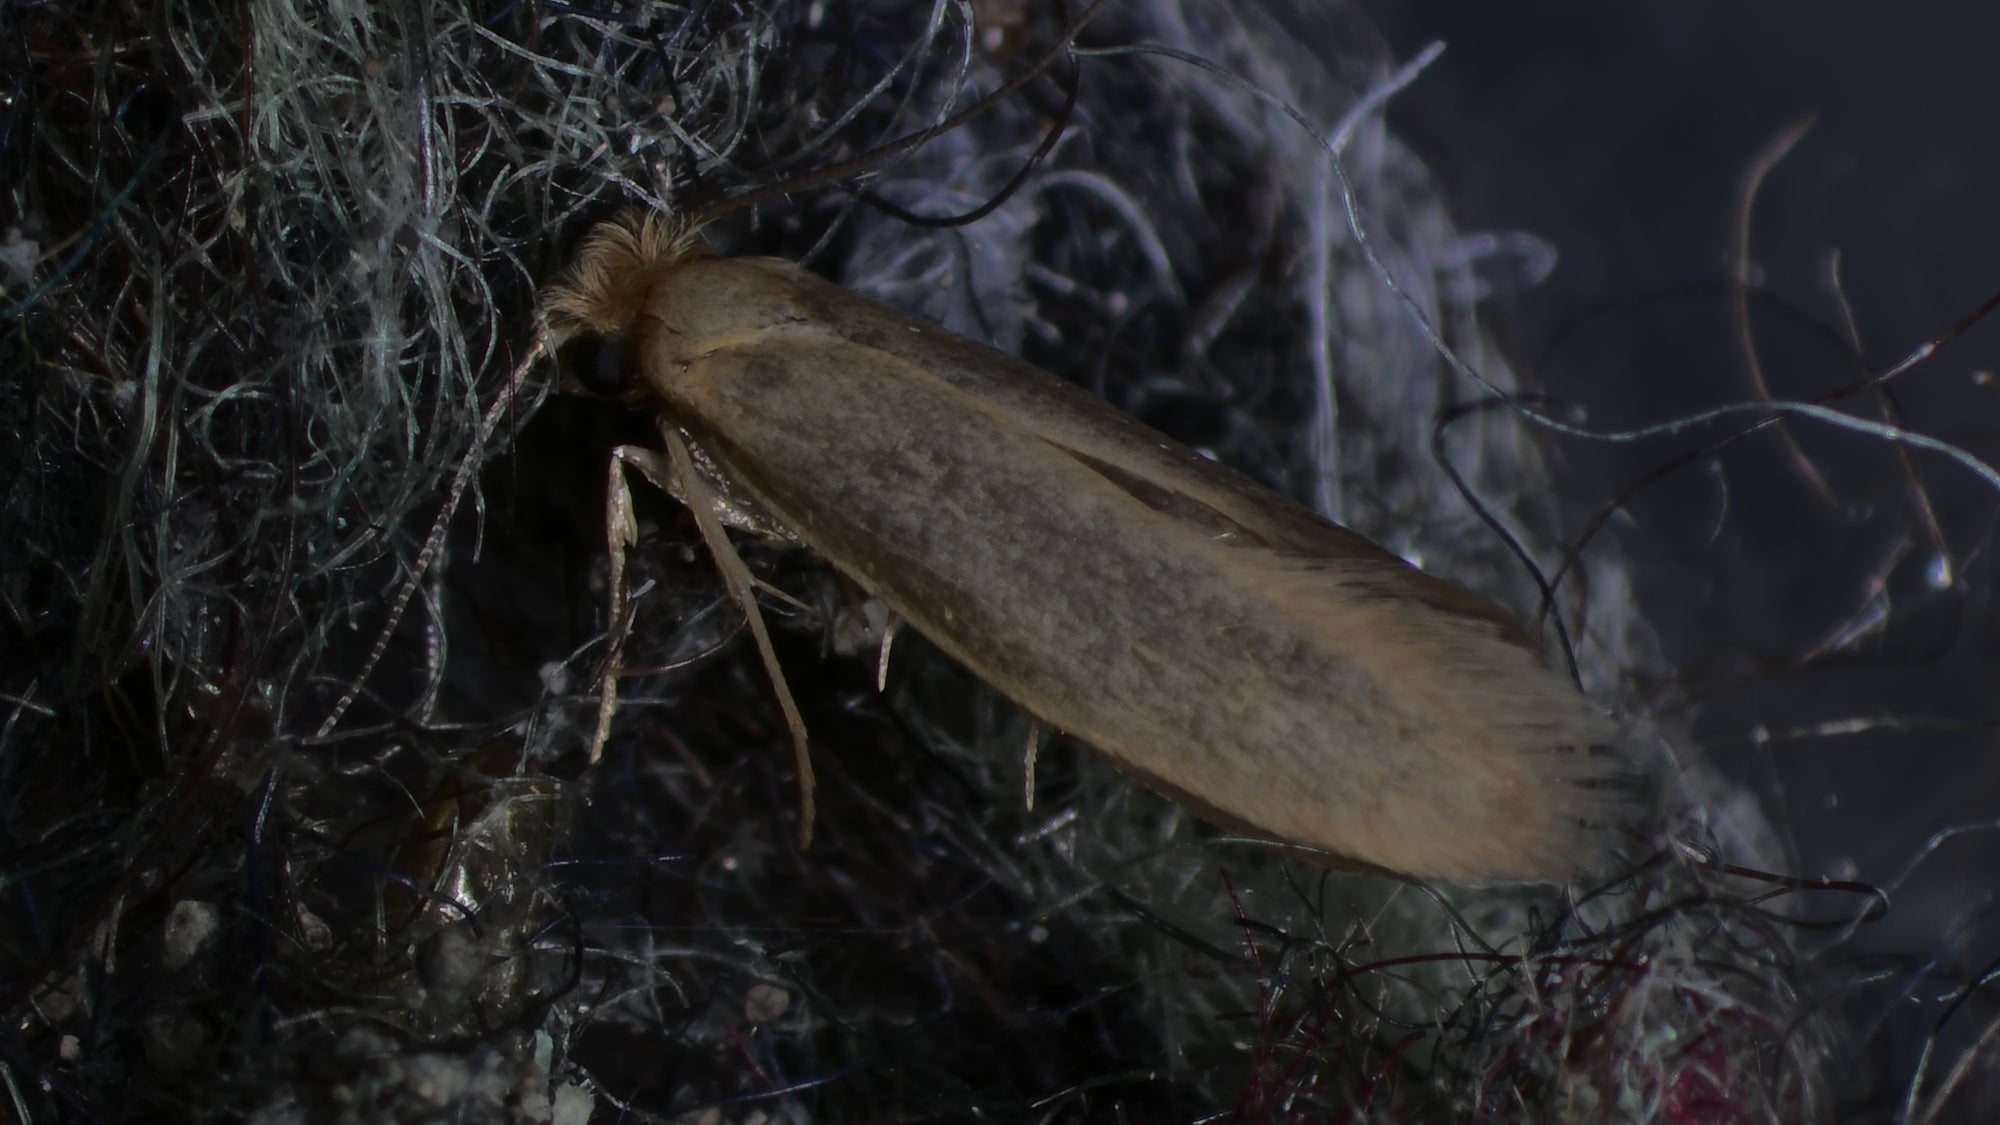 Clothes Moth Egg Killer Sachets - Trichogramma Parasitic Wasps - Dragonfli